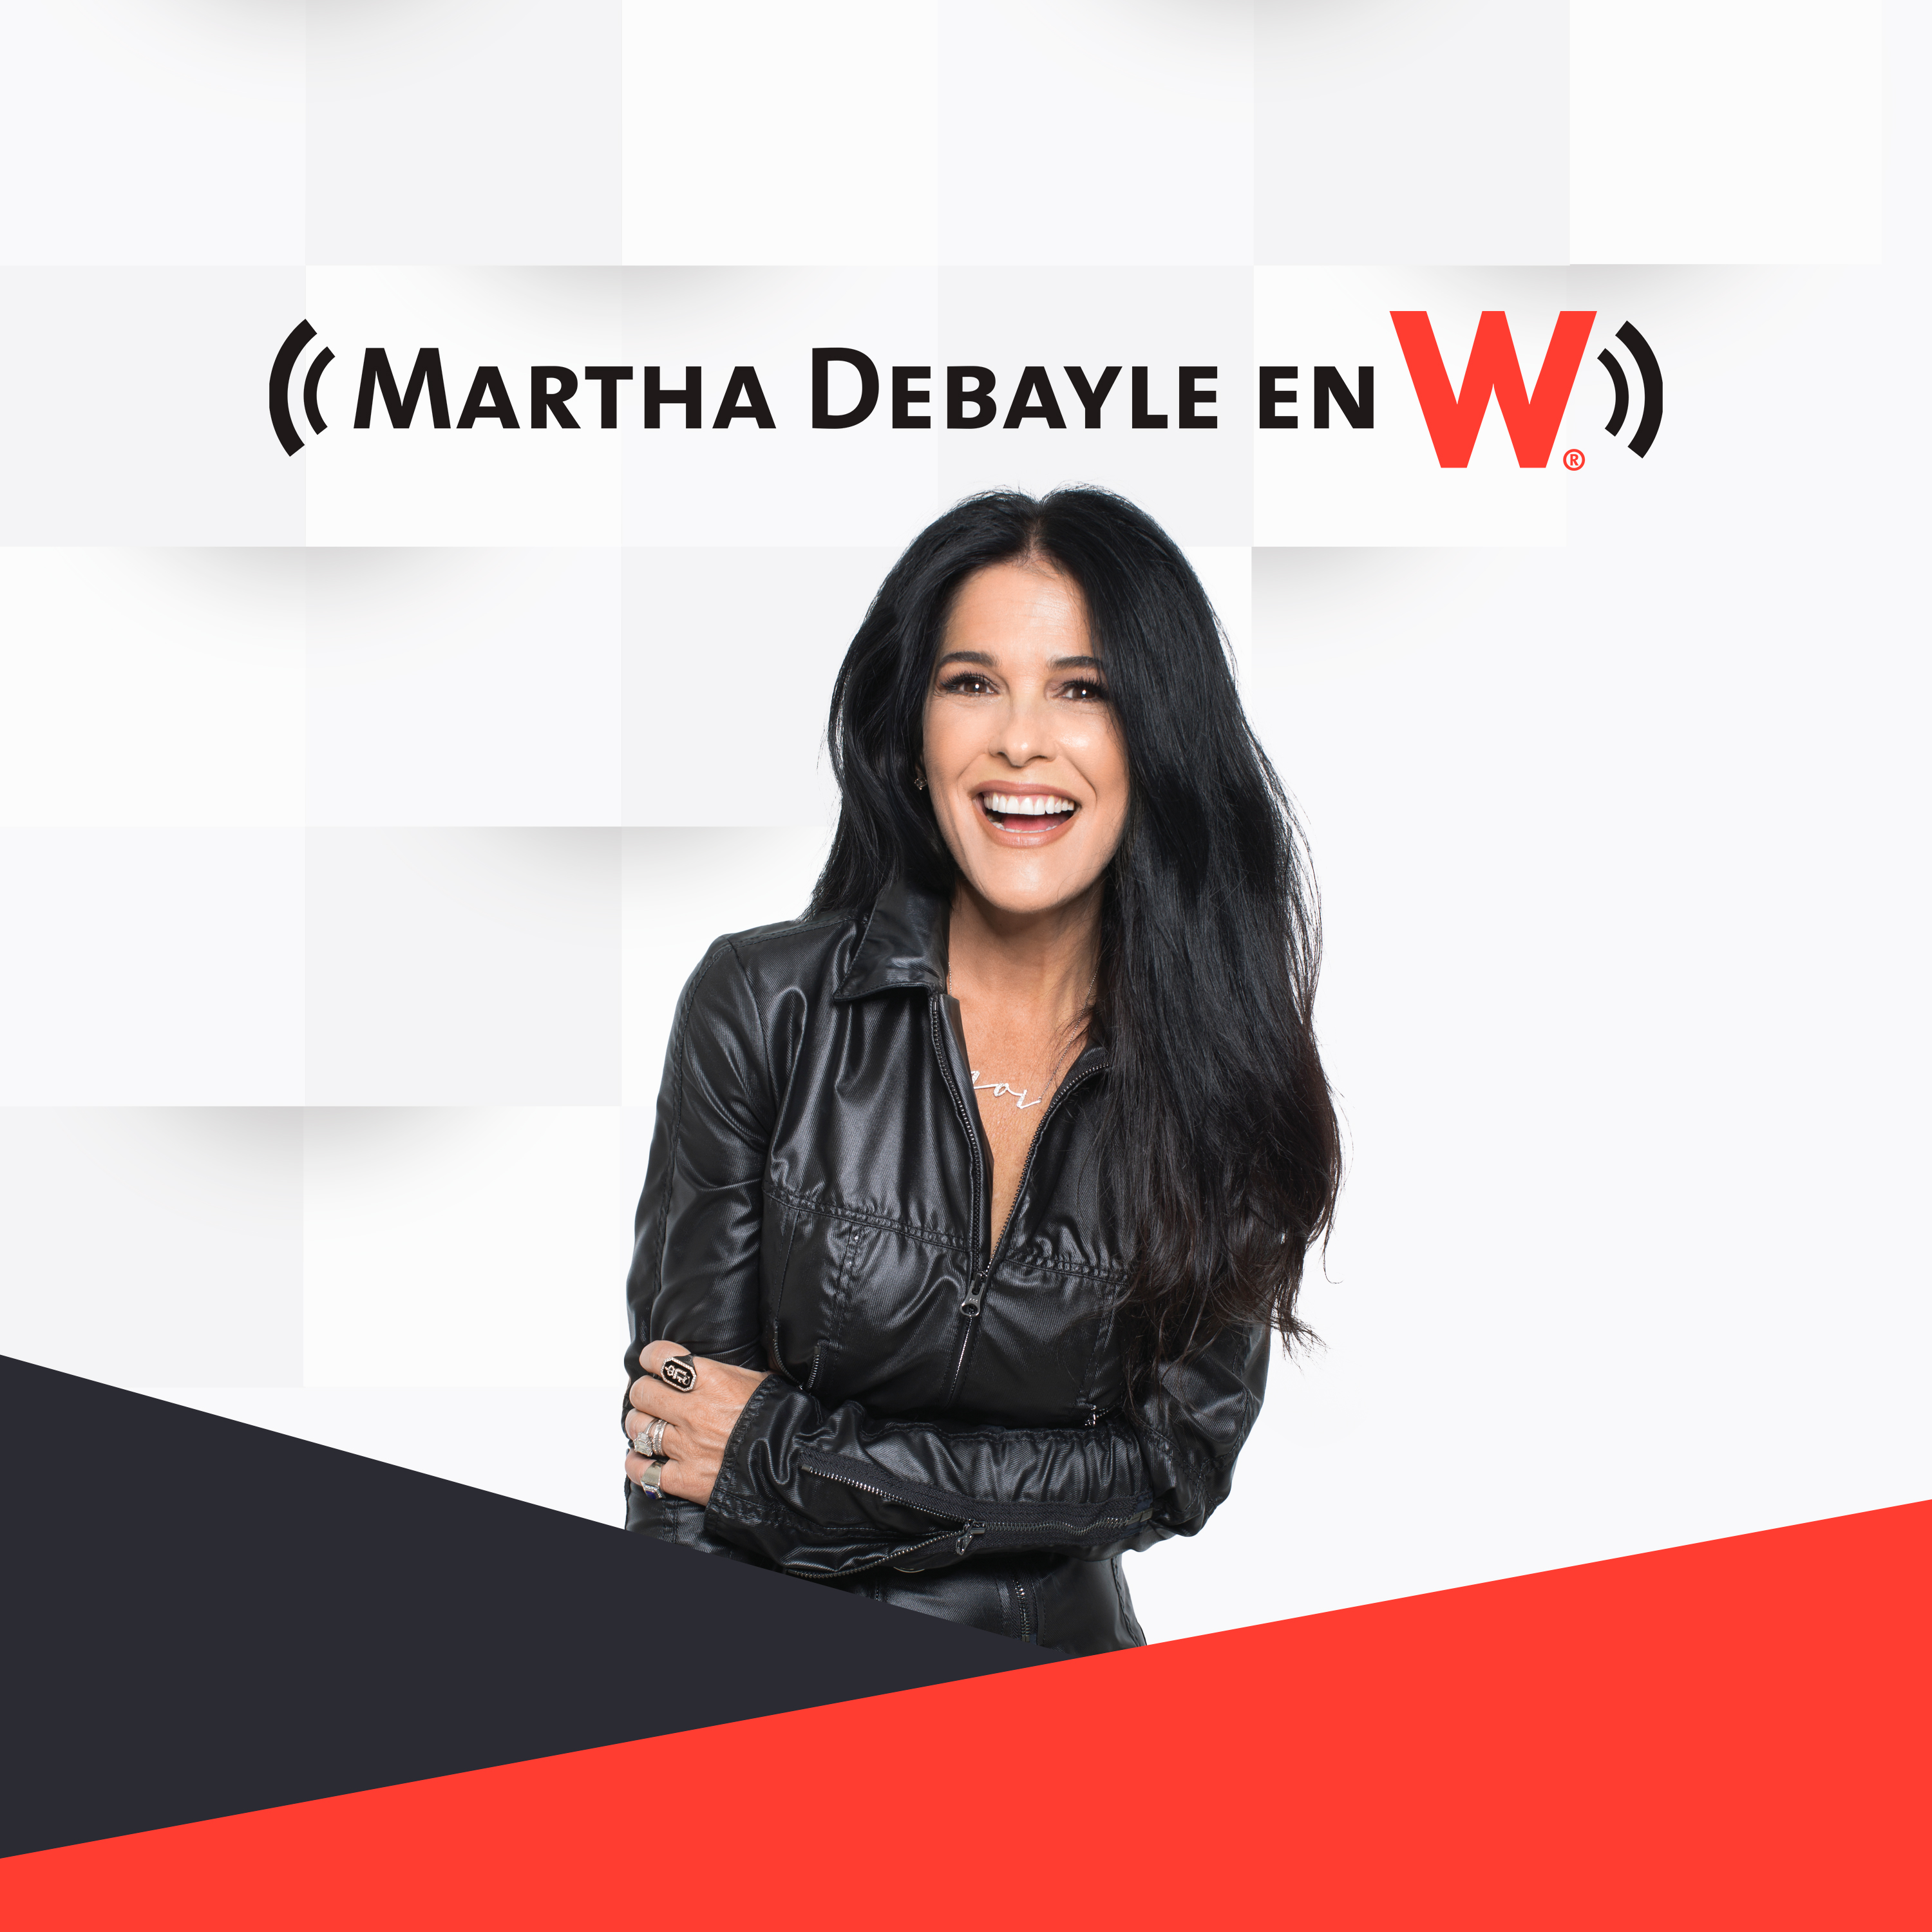 Martha Debayle en W (18/12/2018 - Tramo de 11:00 a 12:00) | Audio | Martha Debayle...